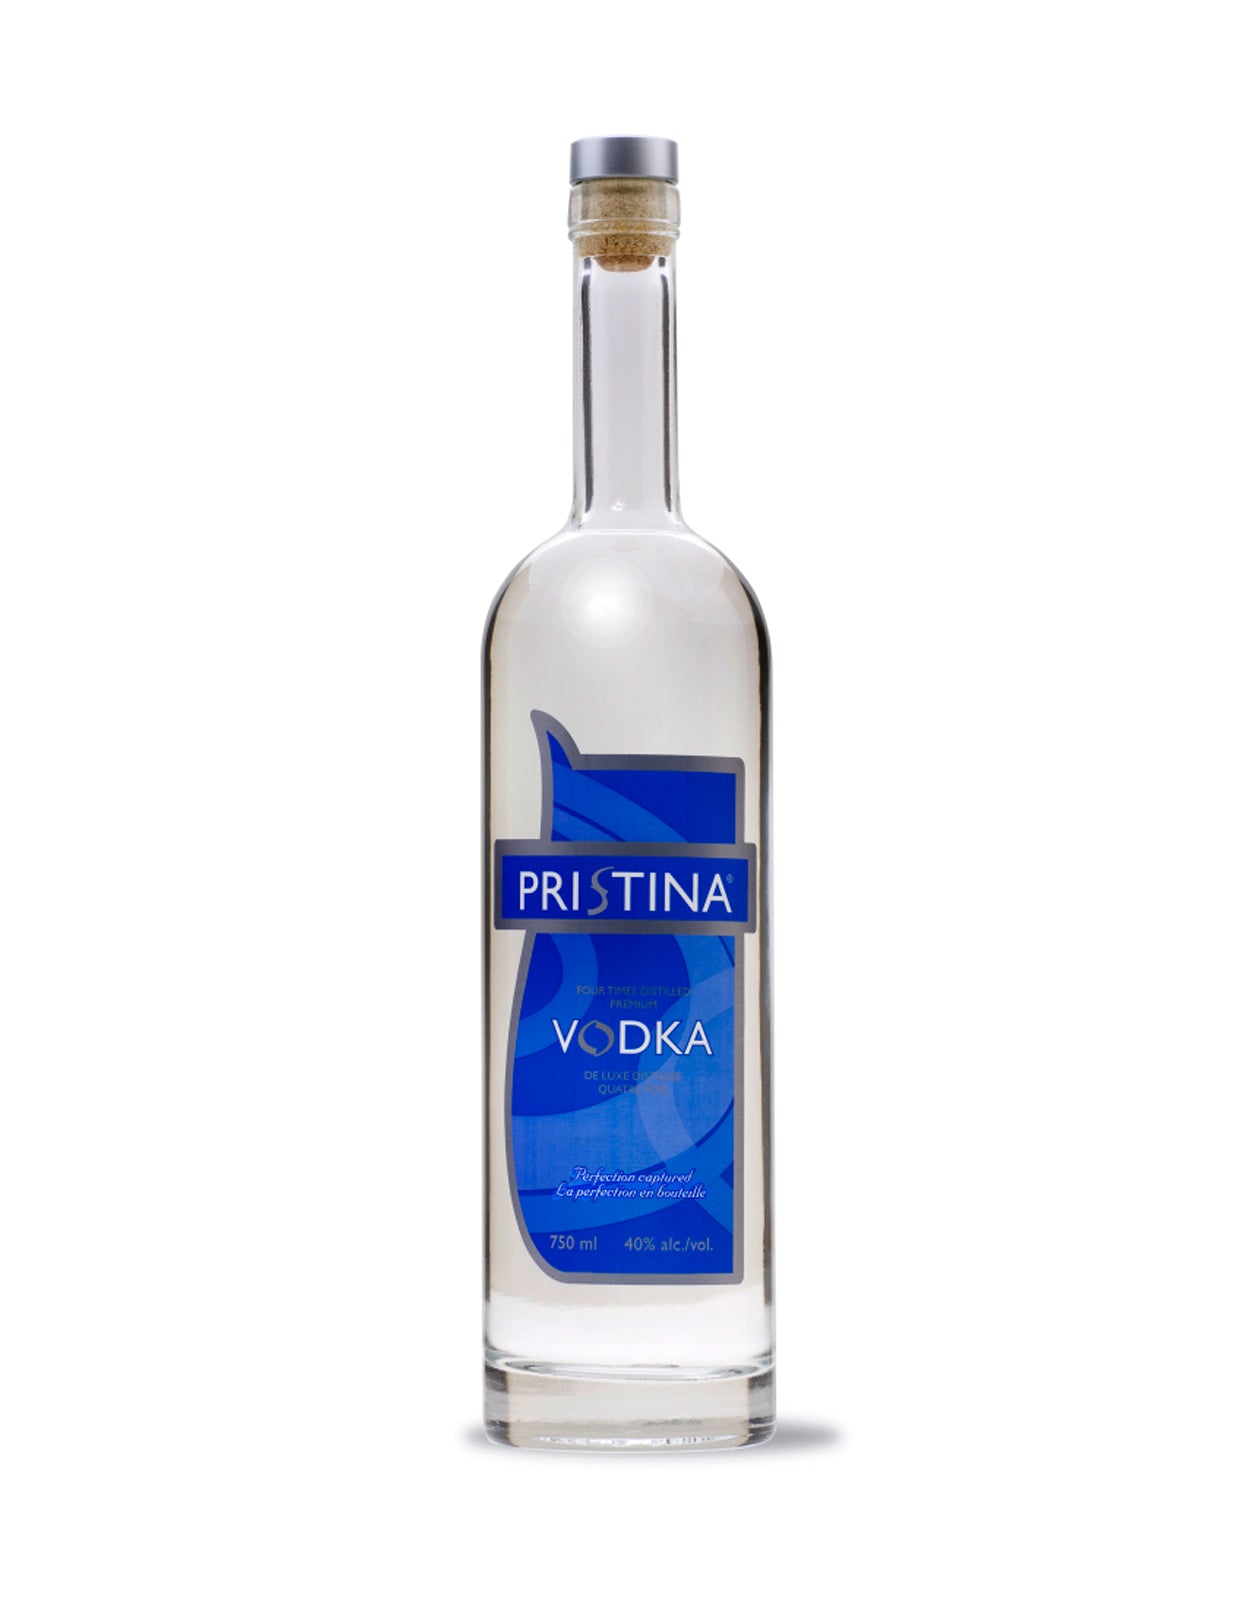 Pristina Vodka